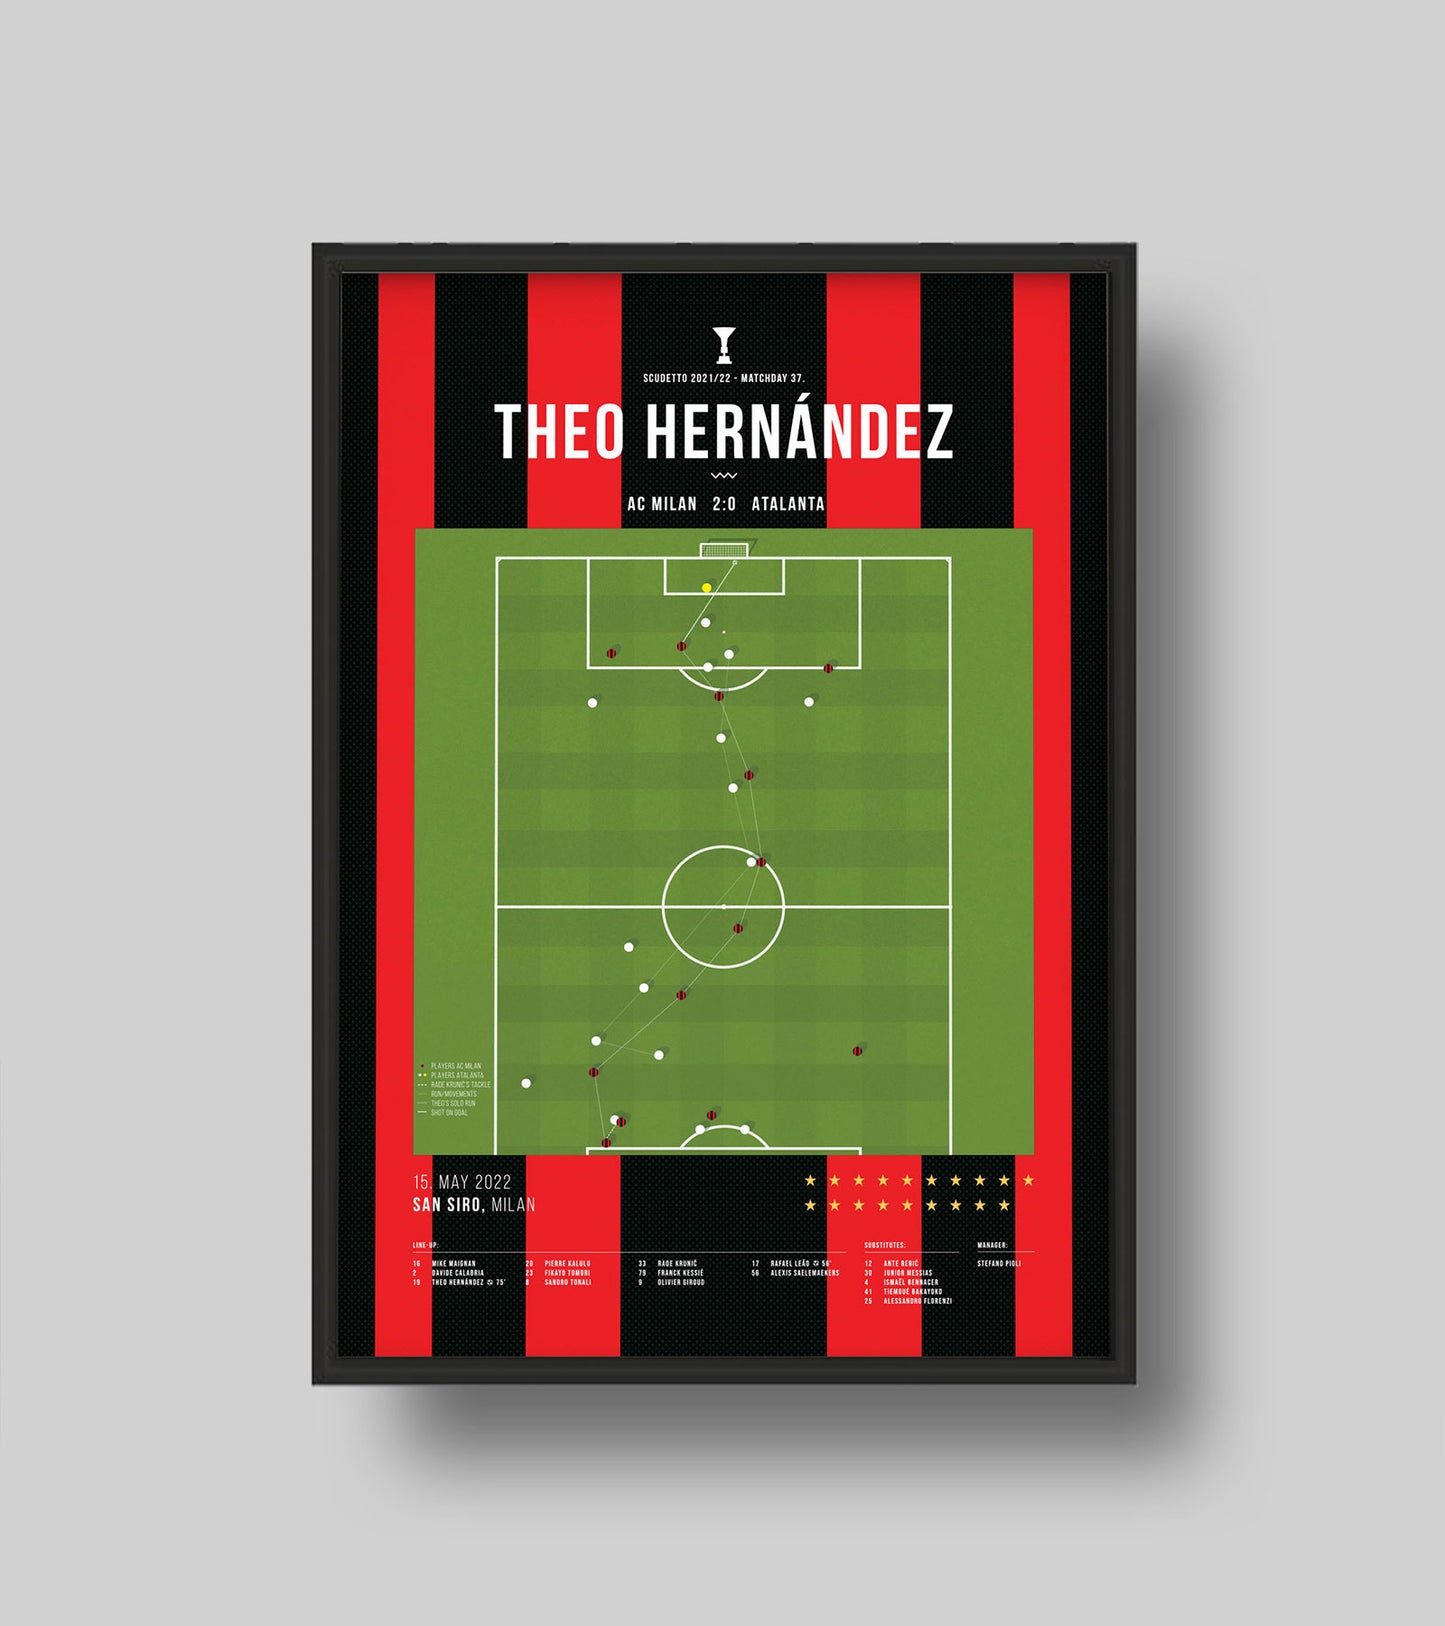 Theo Hernández's Solo Goal Vs Atalanta